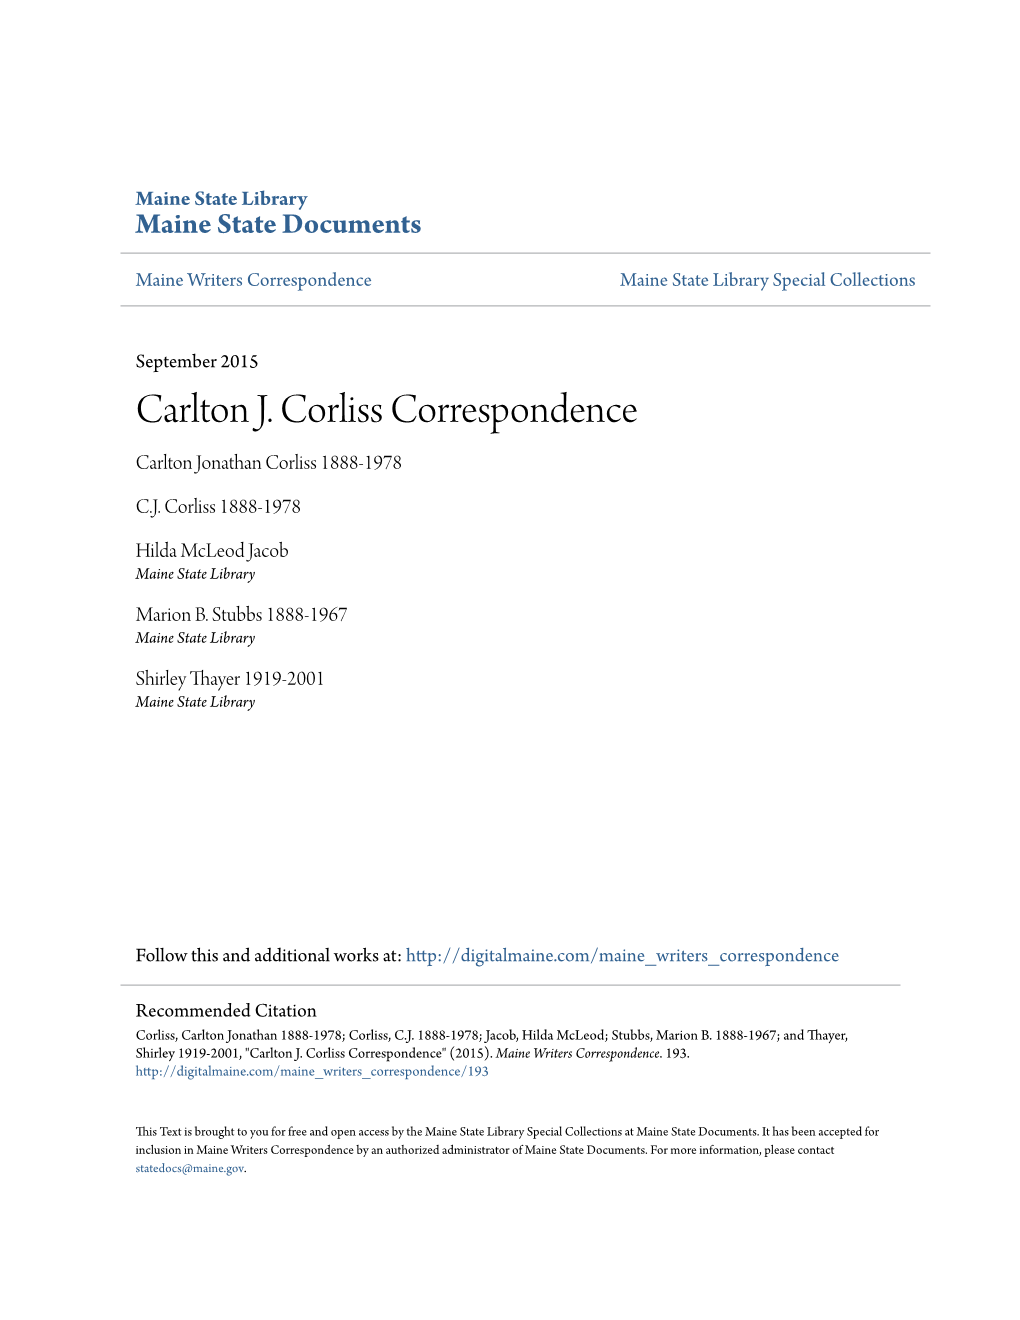 Carlton J. Corliss Correspondence Carlton Jonathan Corliss 1888-1978